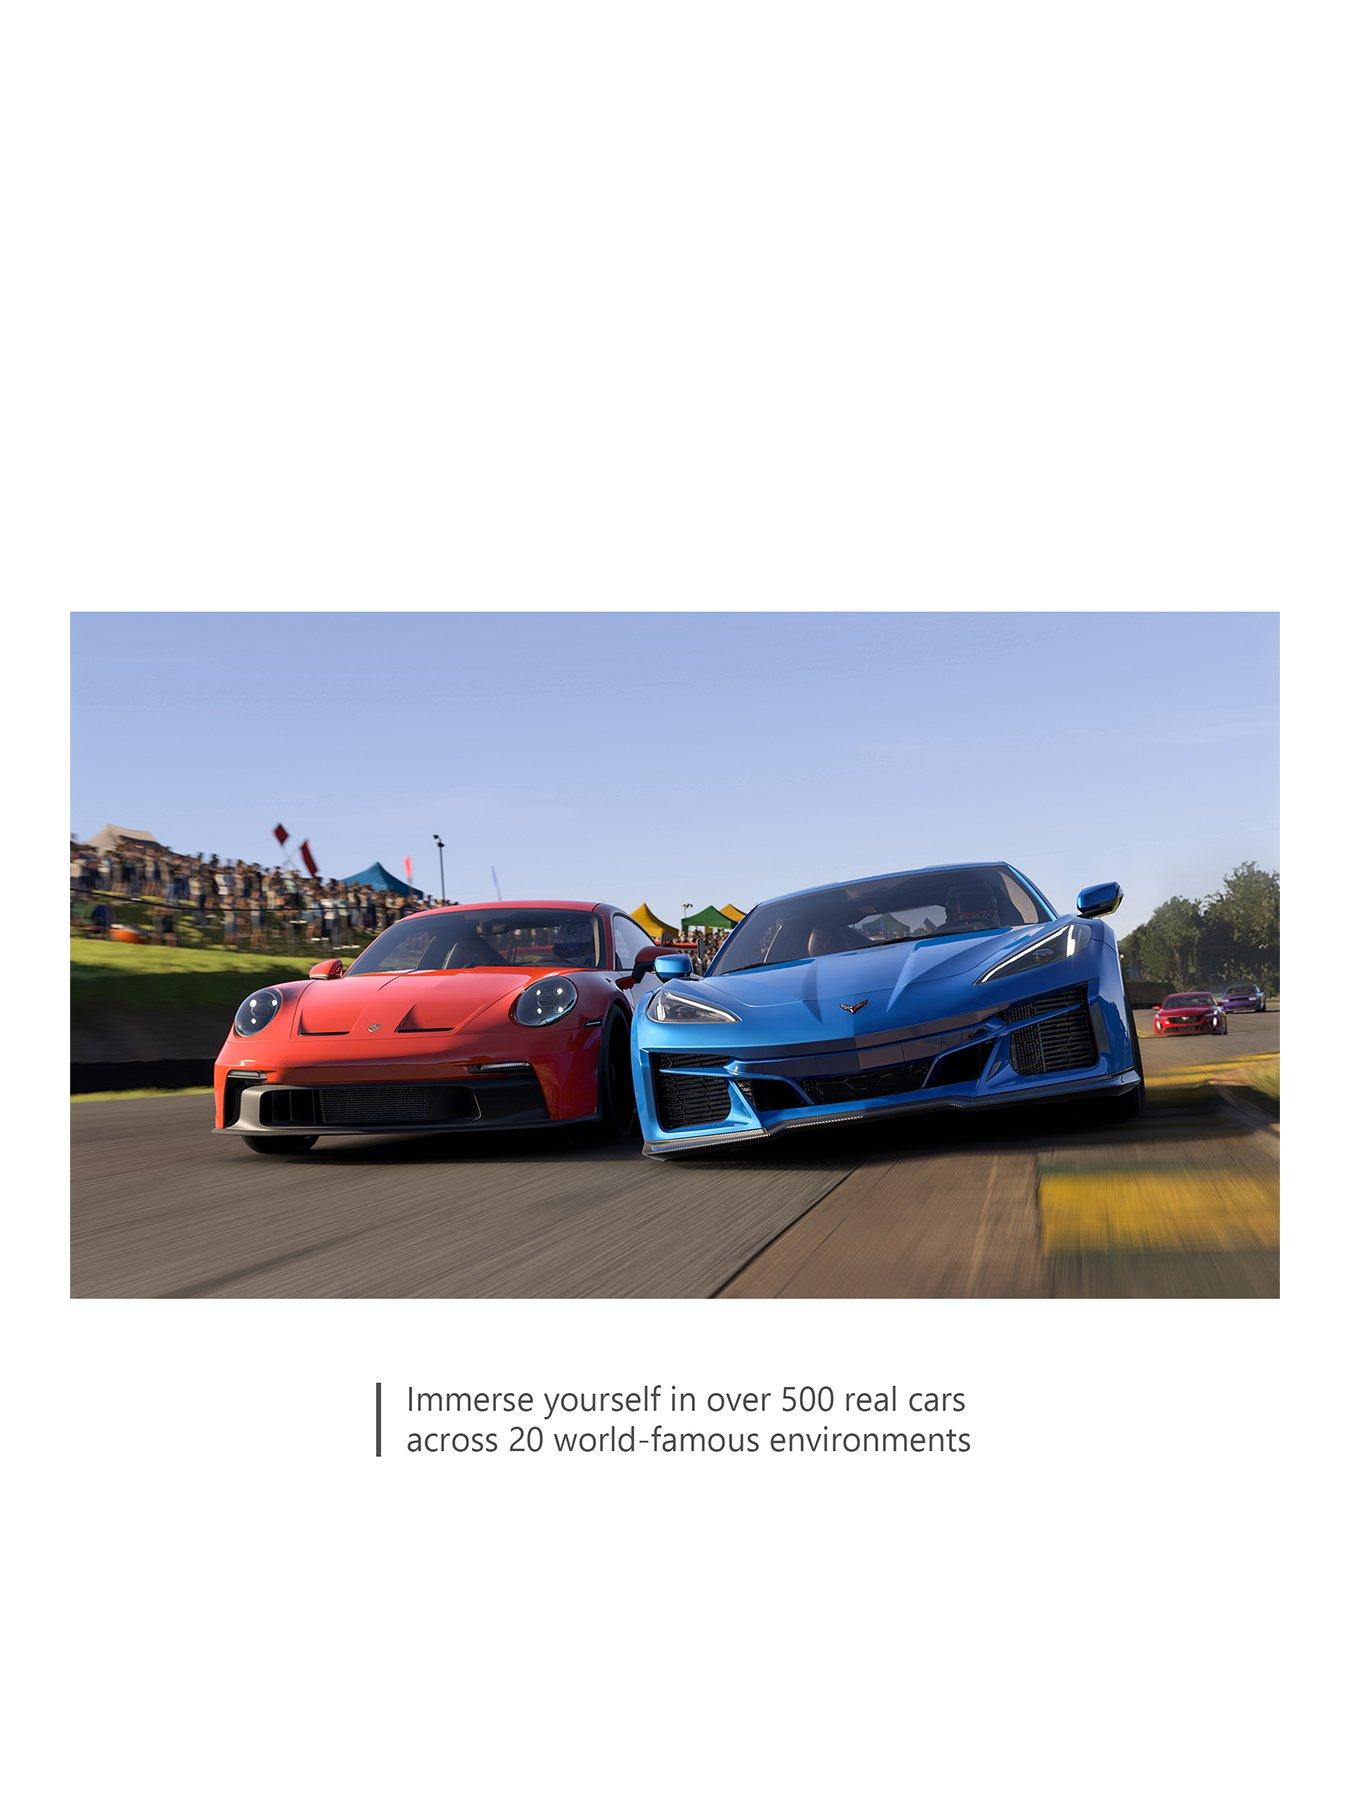 Forza Motorsport flops on Steam